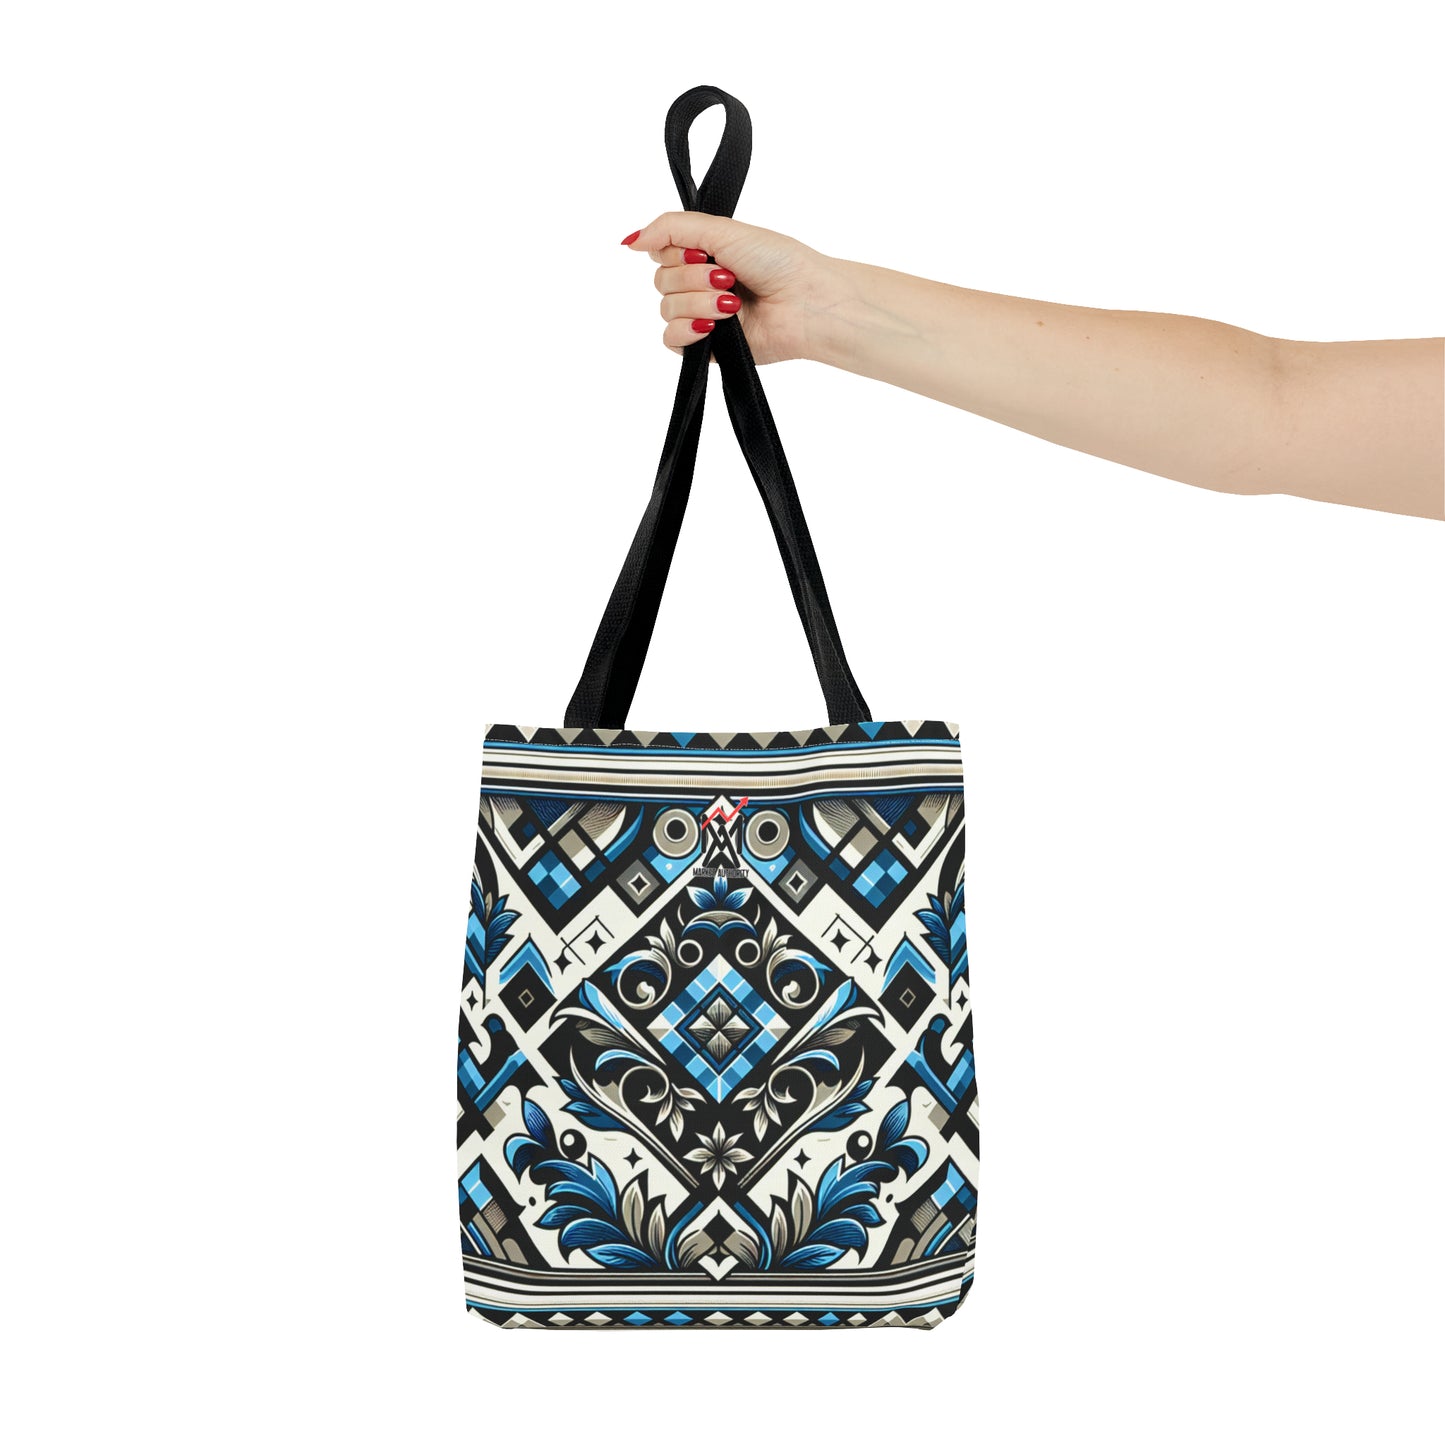 Aztec-Inspired Tote Bag